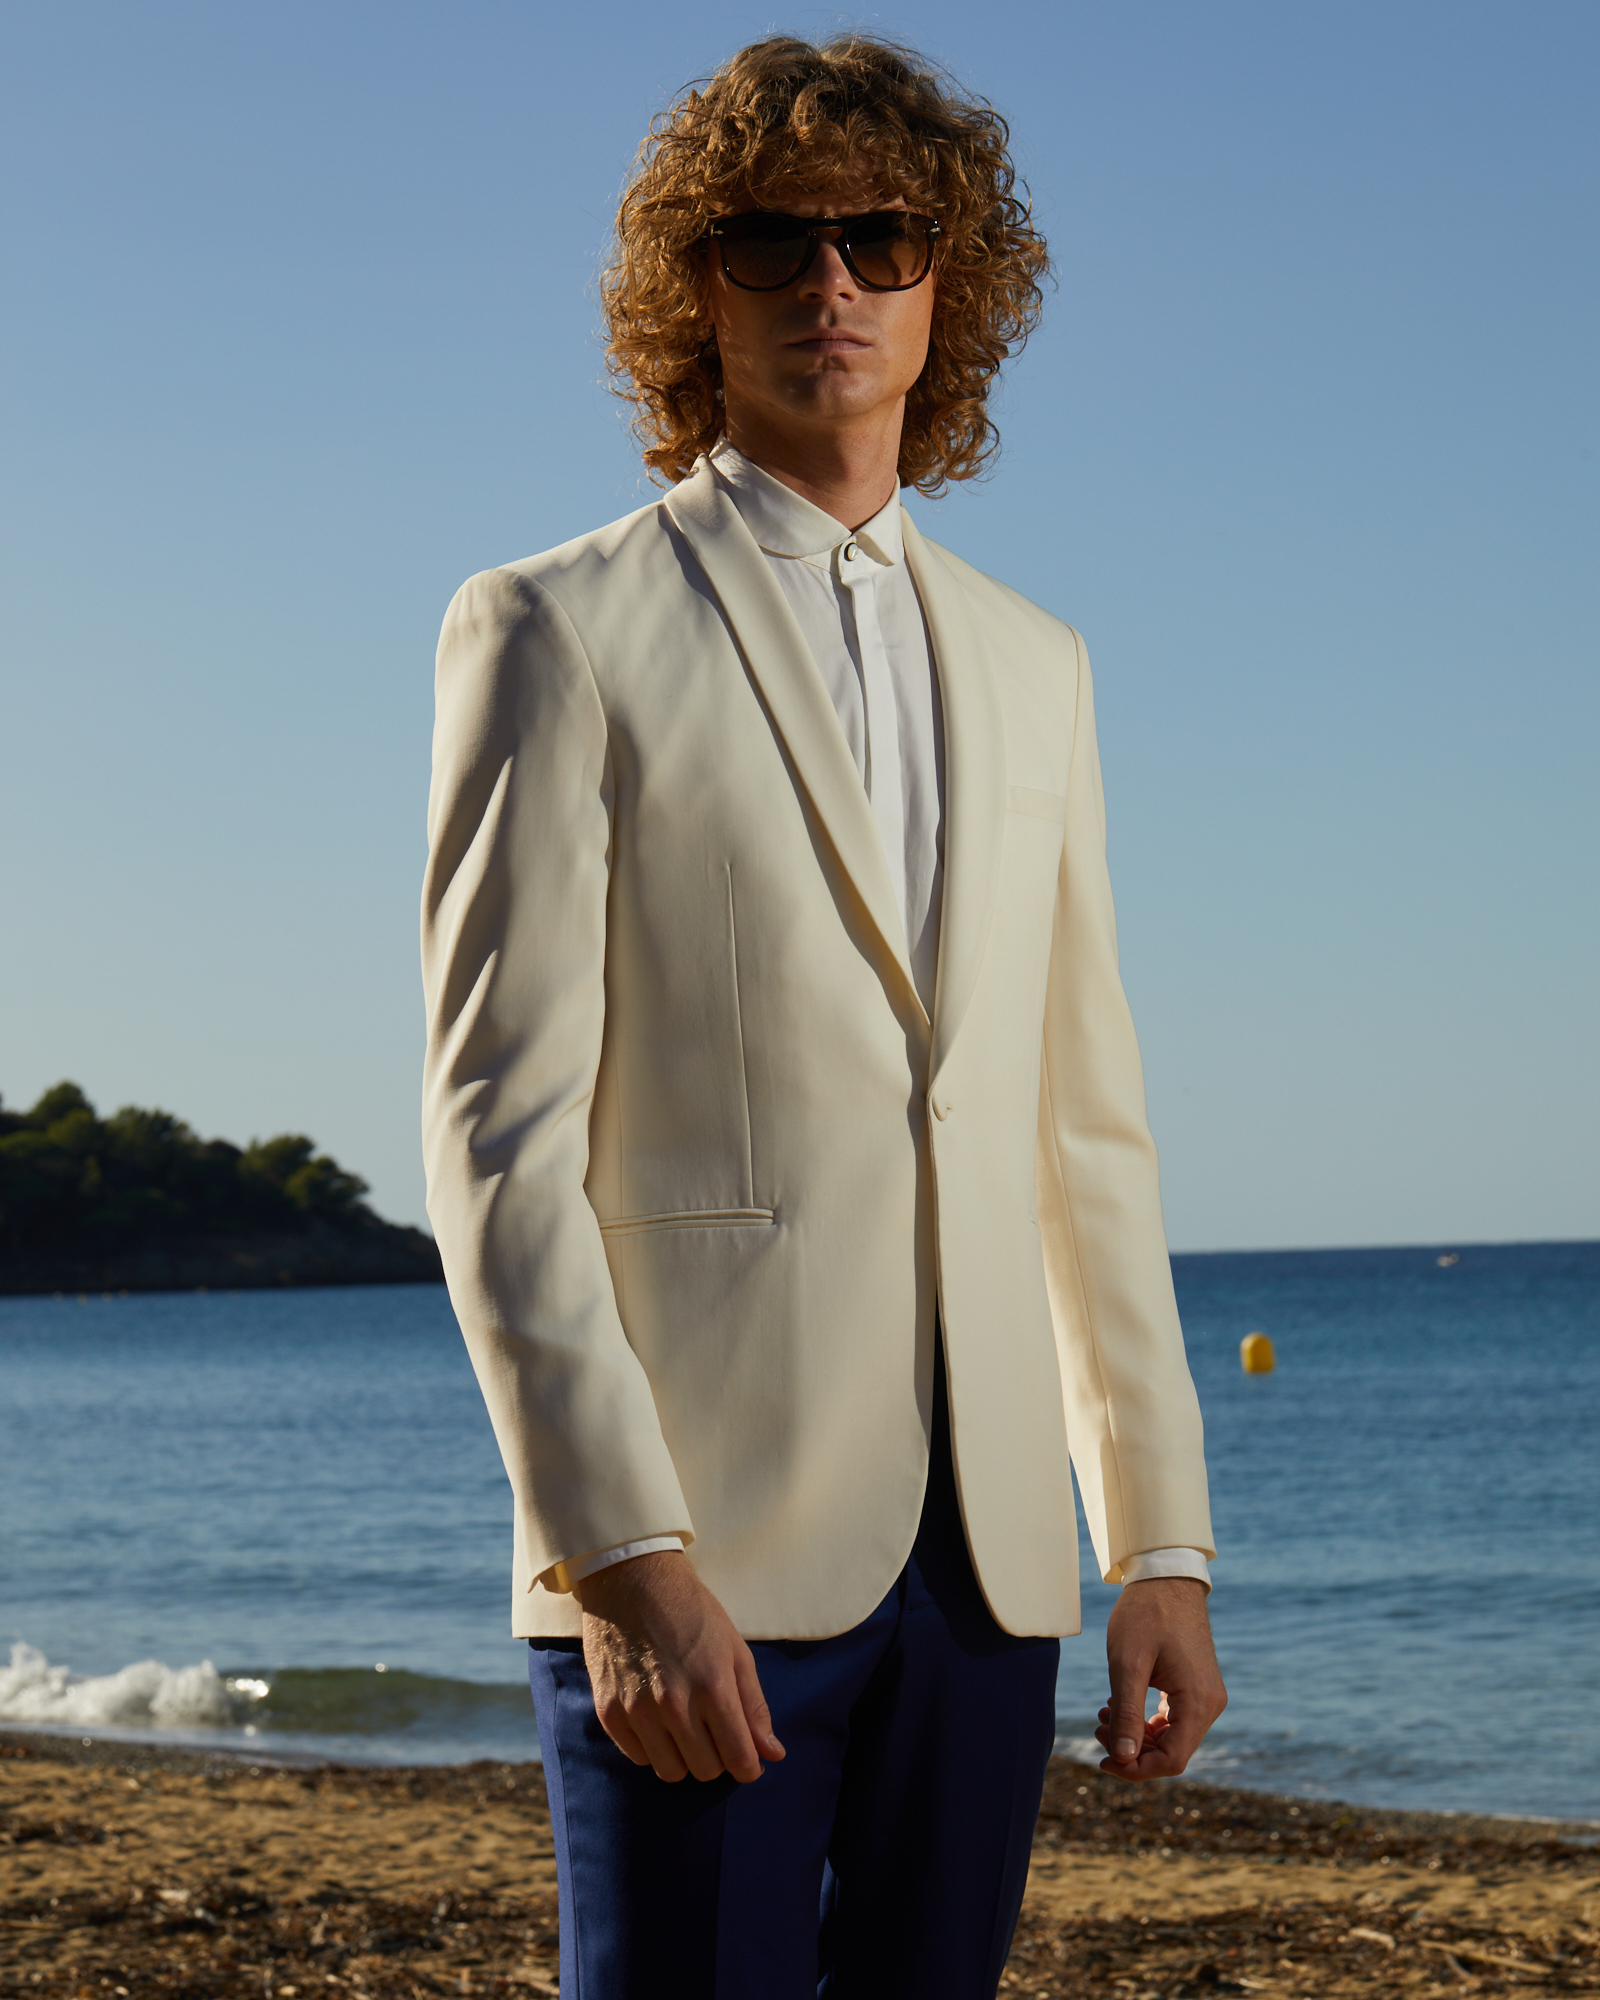 Wedding Suit Colors: 3 Trendy Options in 2018 - Jim's Formal Wear Blog